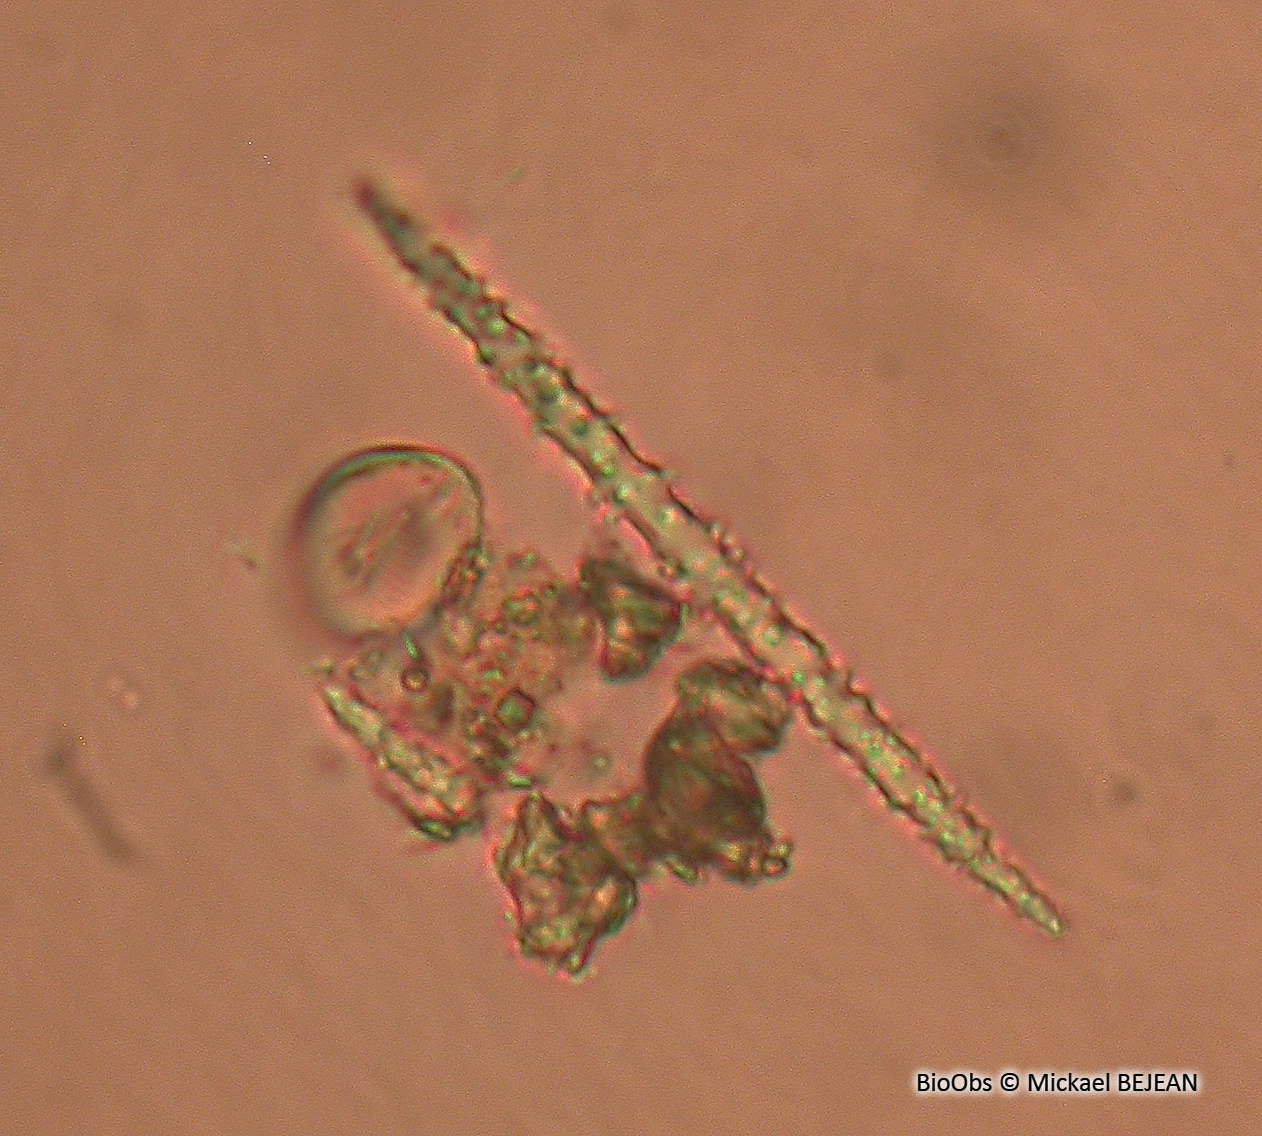 Eponge d'eau douce - Spongilla lacustris - Mickael BEJEAN - BioObs